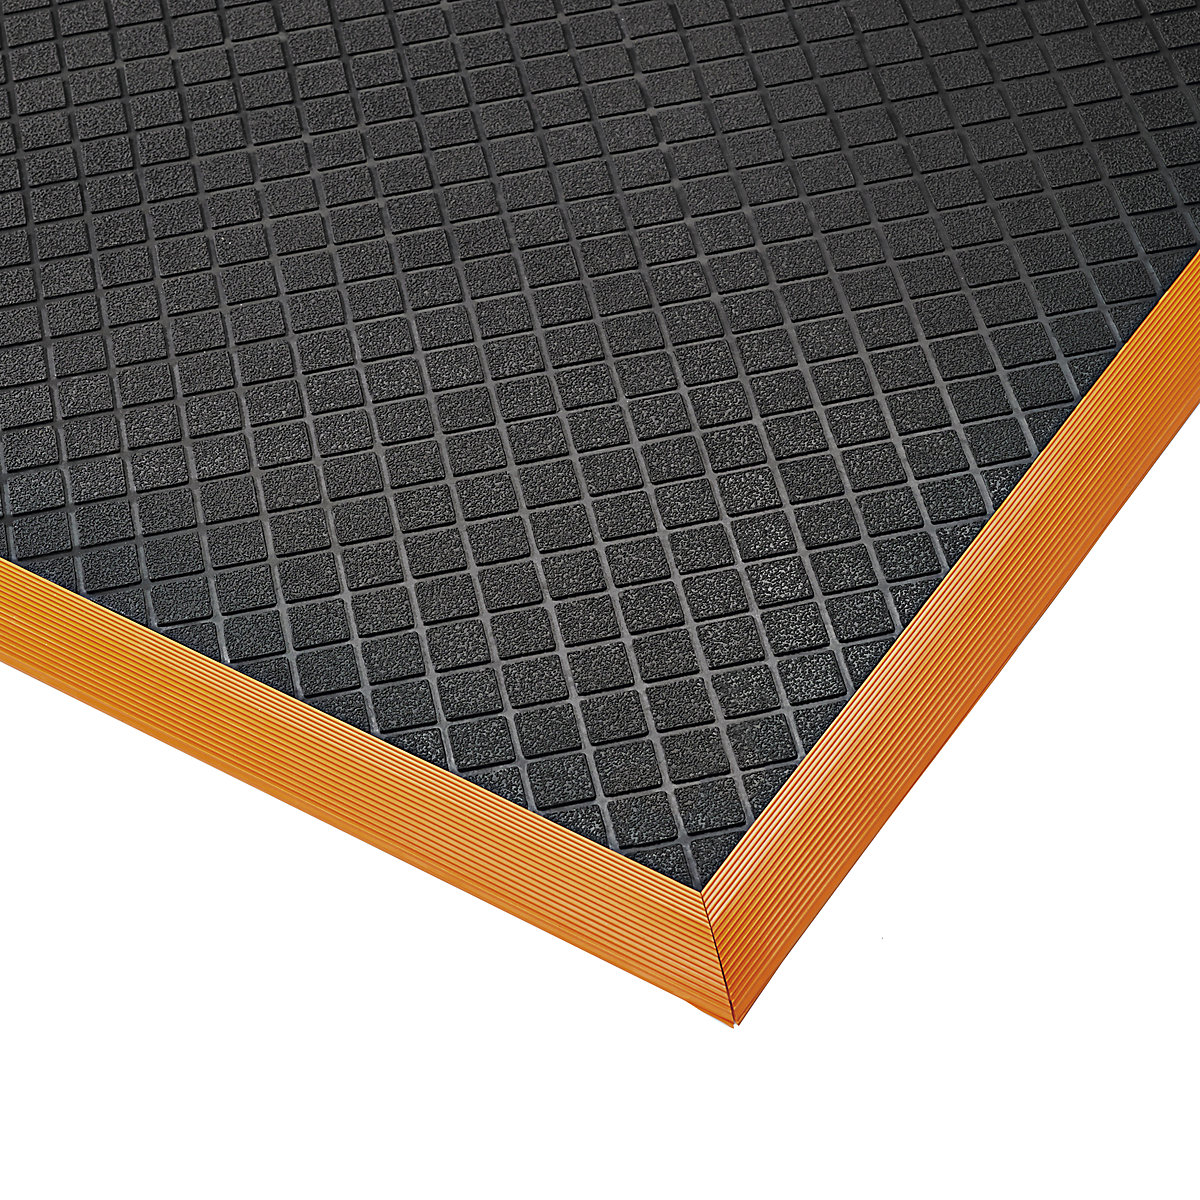 Safety Stance anti-fatigue matting – NOTRAX